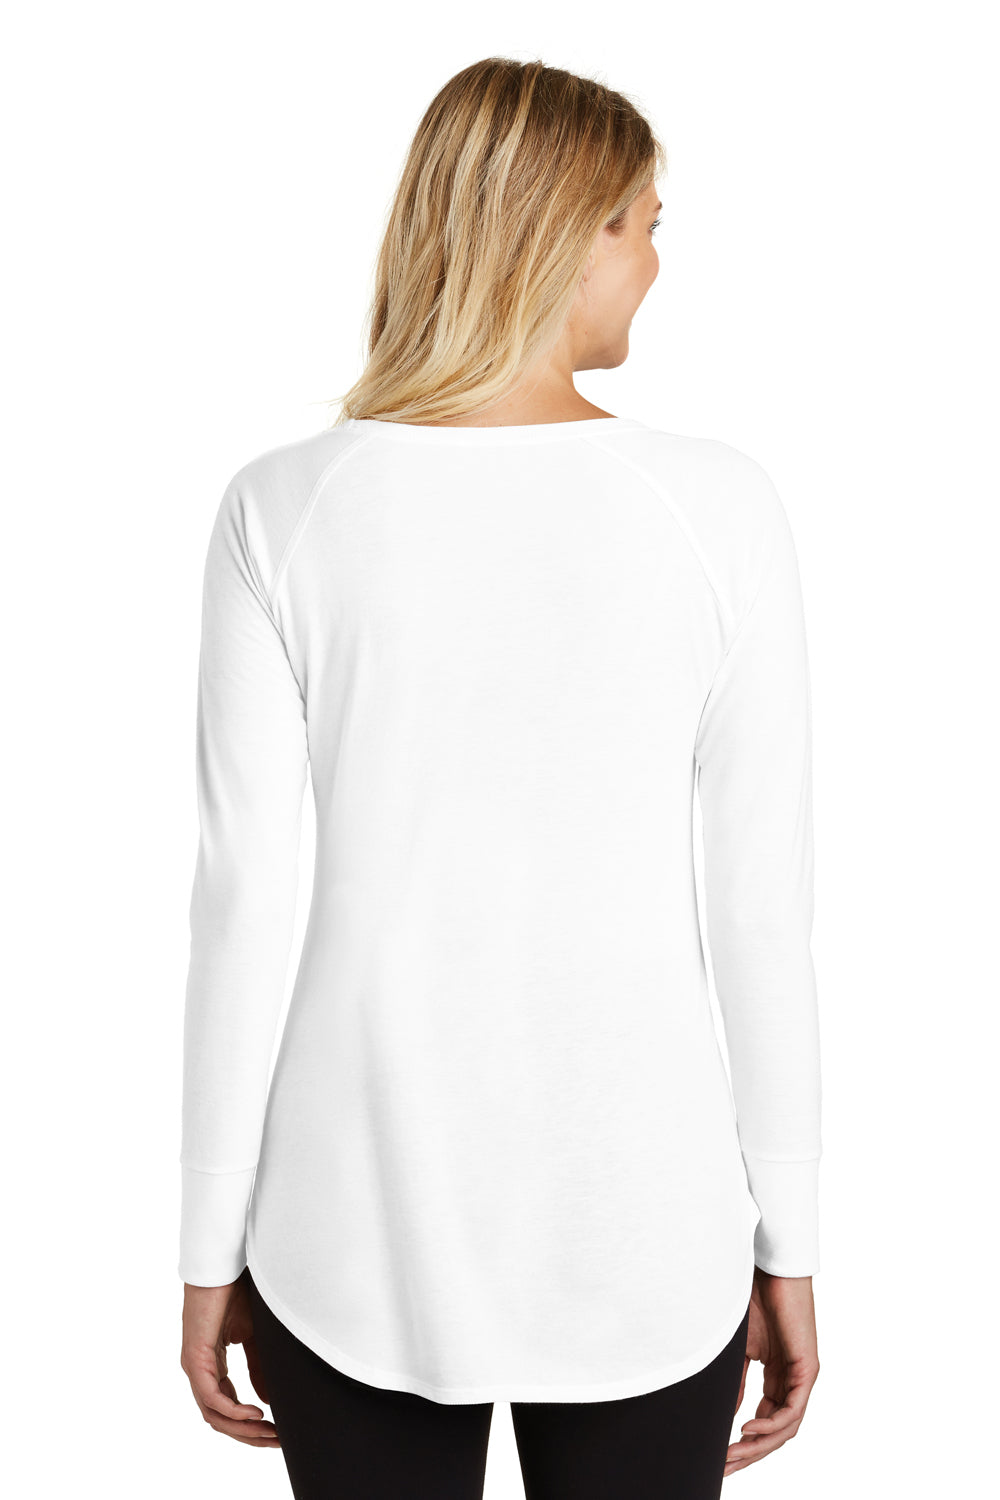 District DT132L Womens Perfect Tri Long Sleeve Crewneck T-Shirt White Back